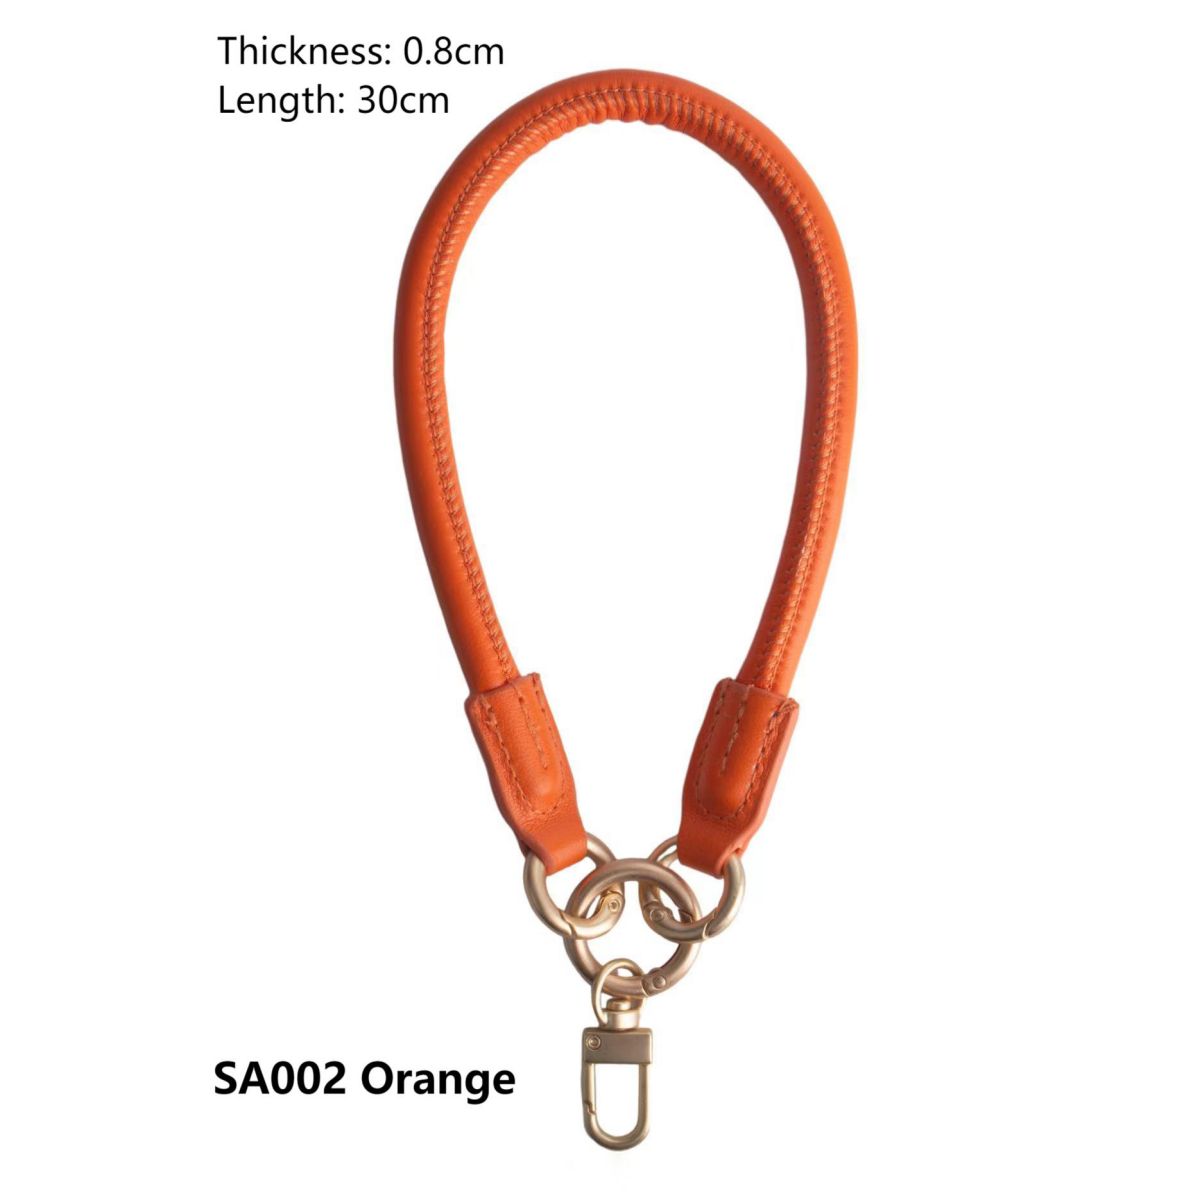 Leather Wrist Strap SA002 Orange - Hugmie